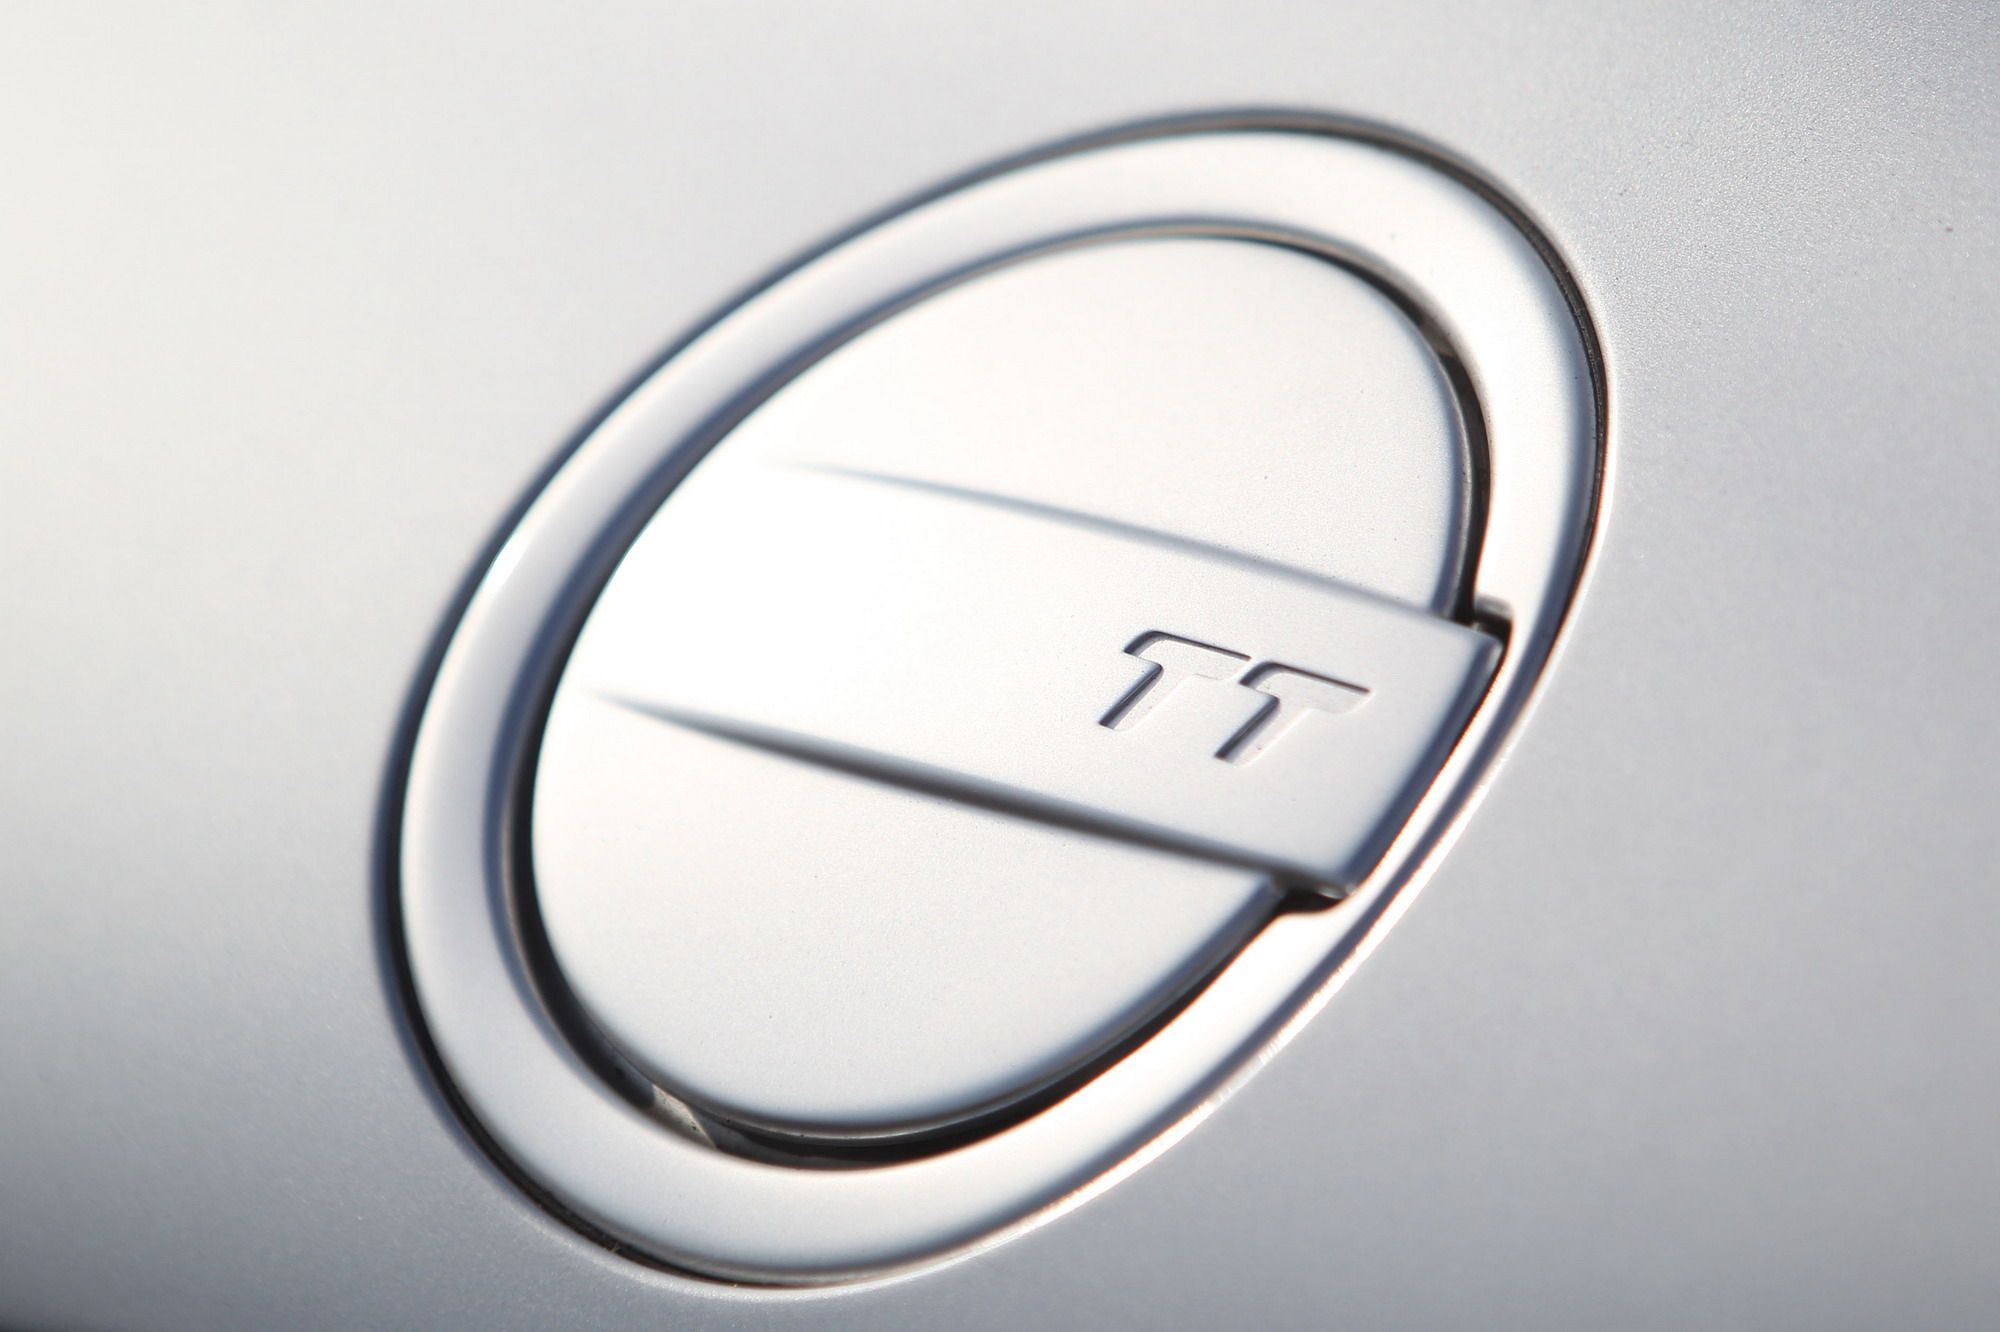 2011 Audi TT GT4 concept